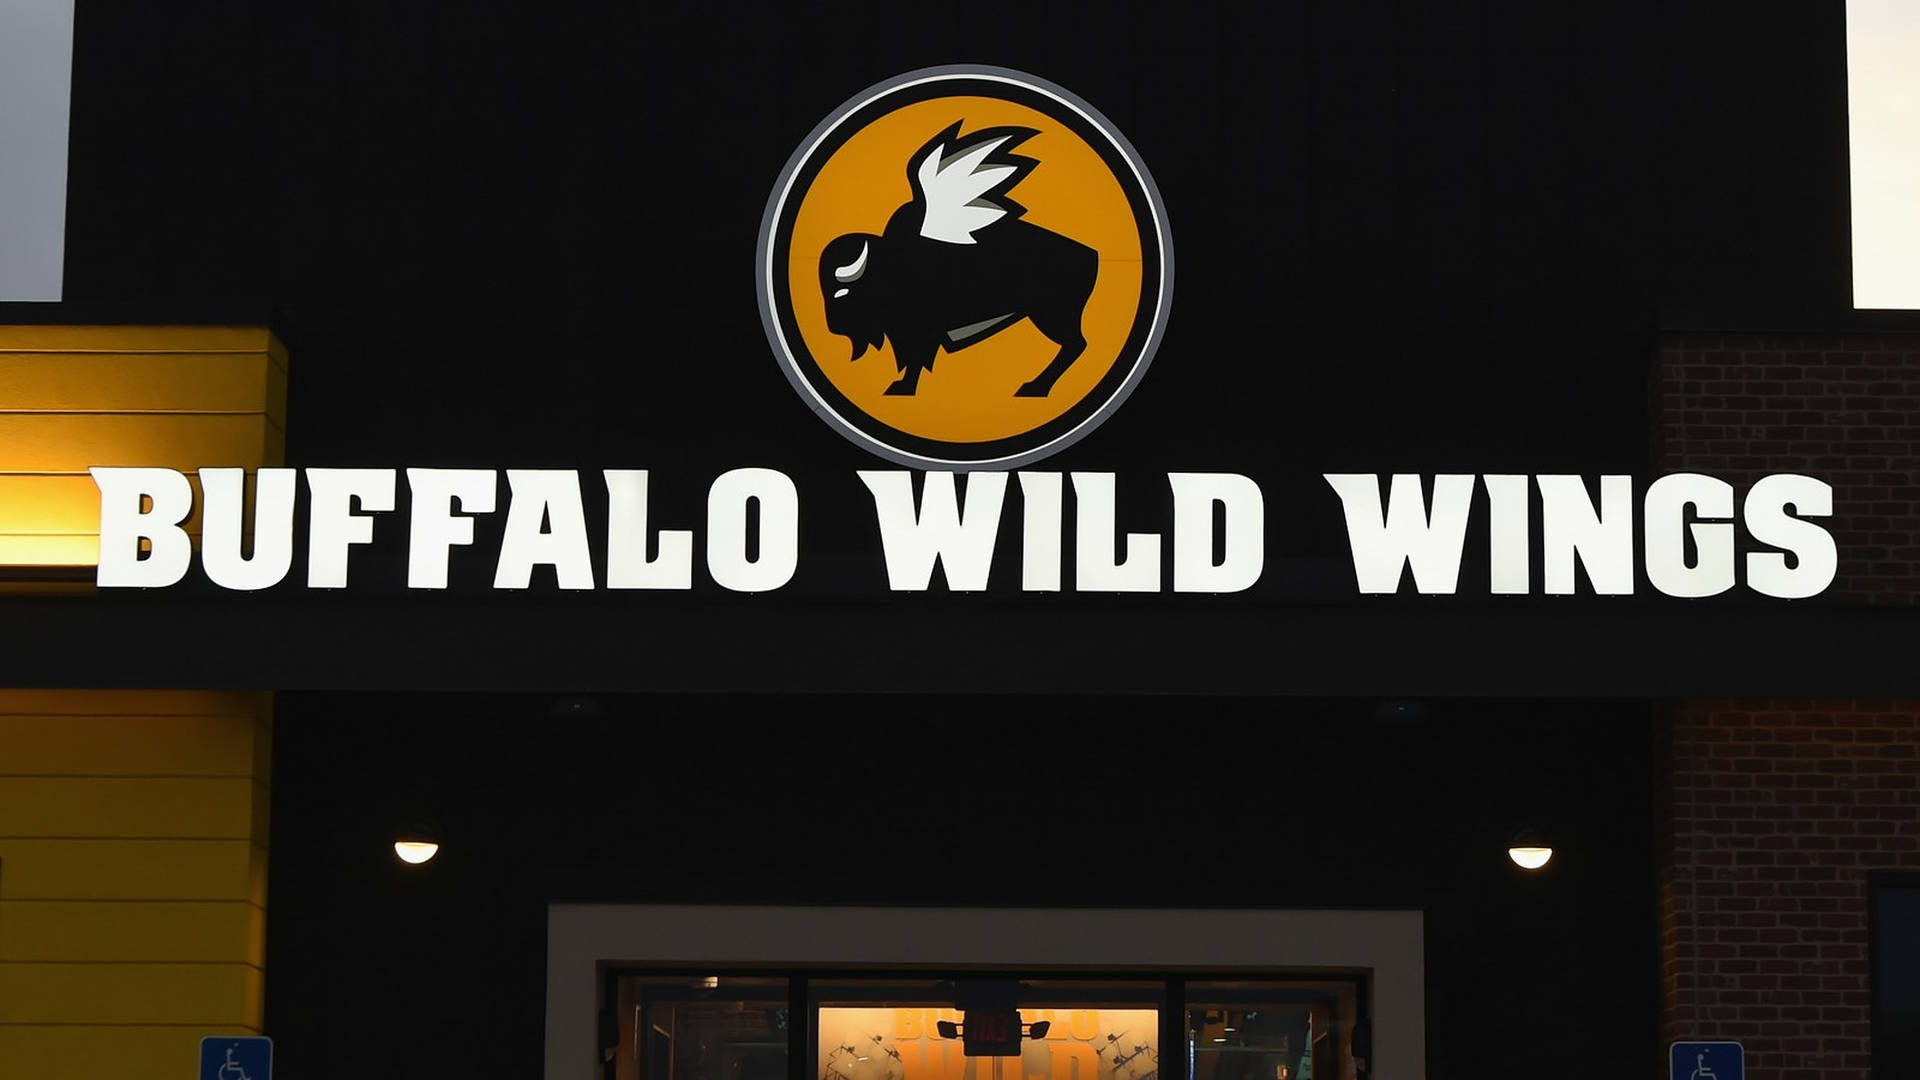 Buffalowild Wings Restaurant-logo Wallpaper